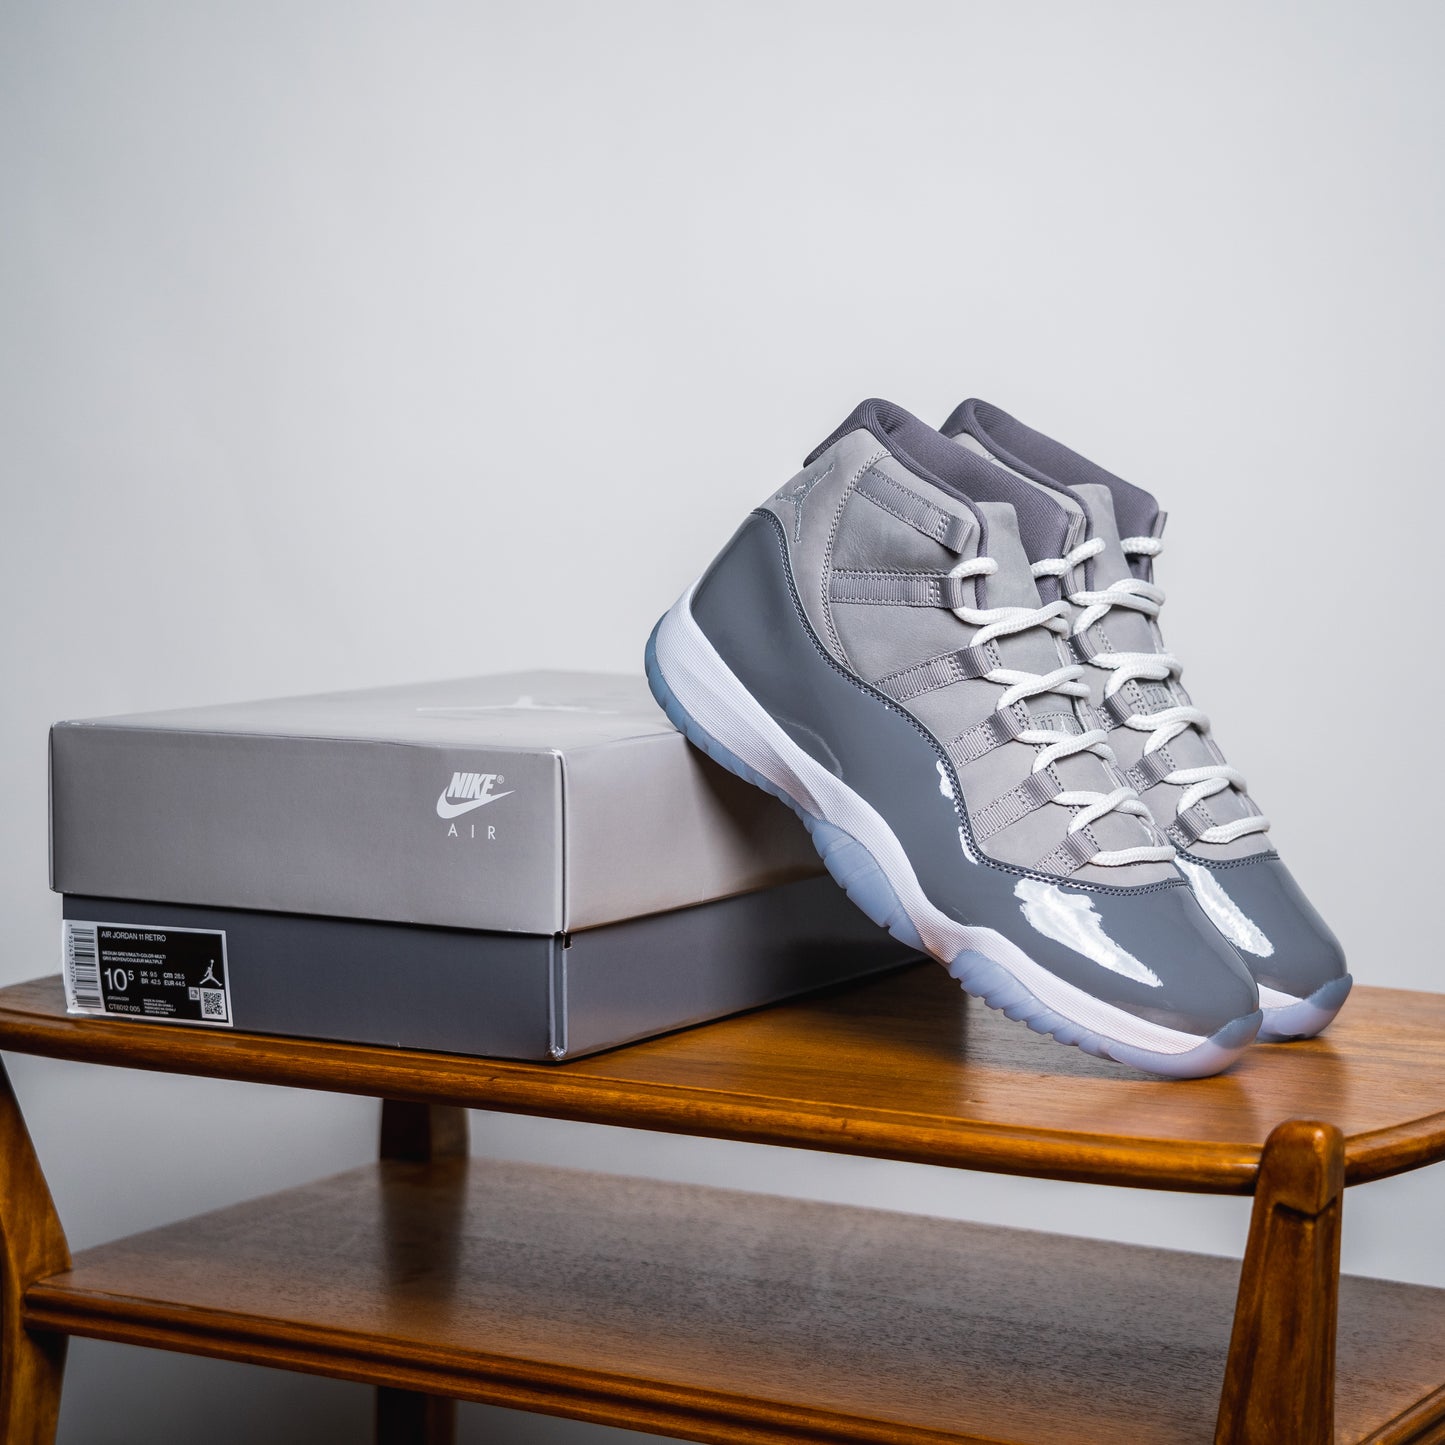 Jordan 11 Retro "Cool Grey" // Grösse EU 44.5 // Sneaker